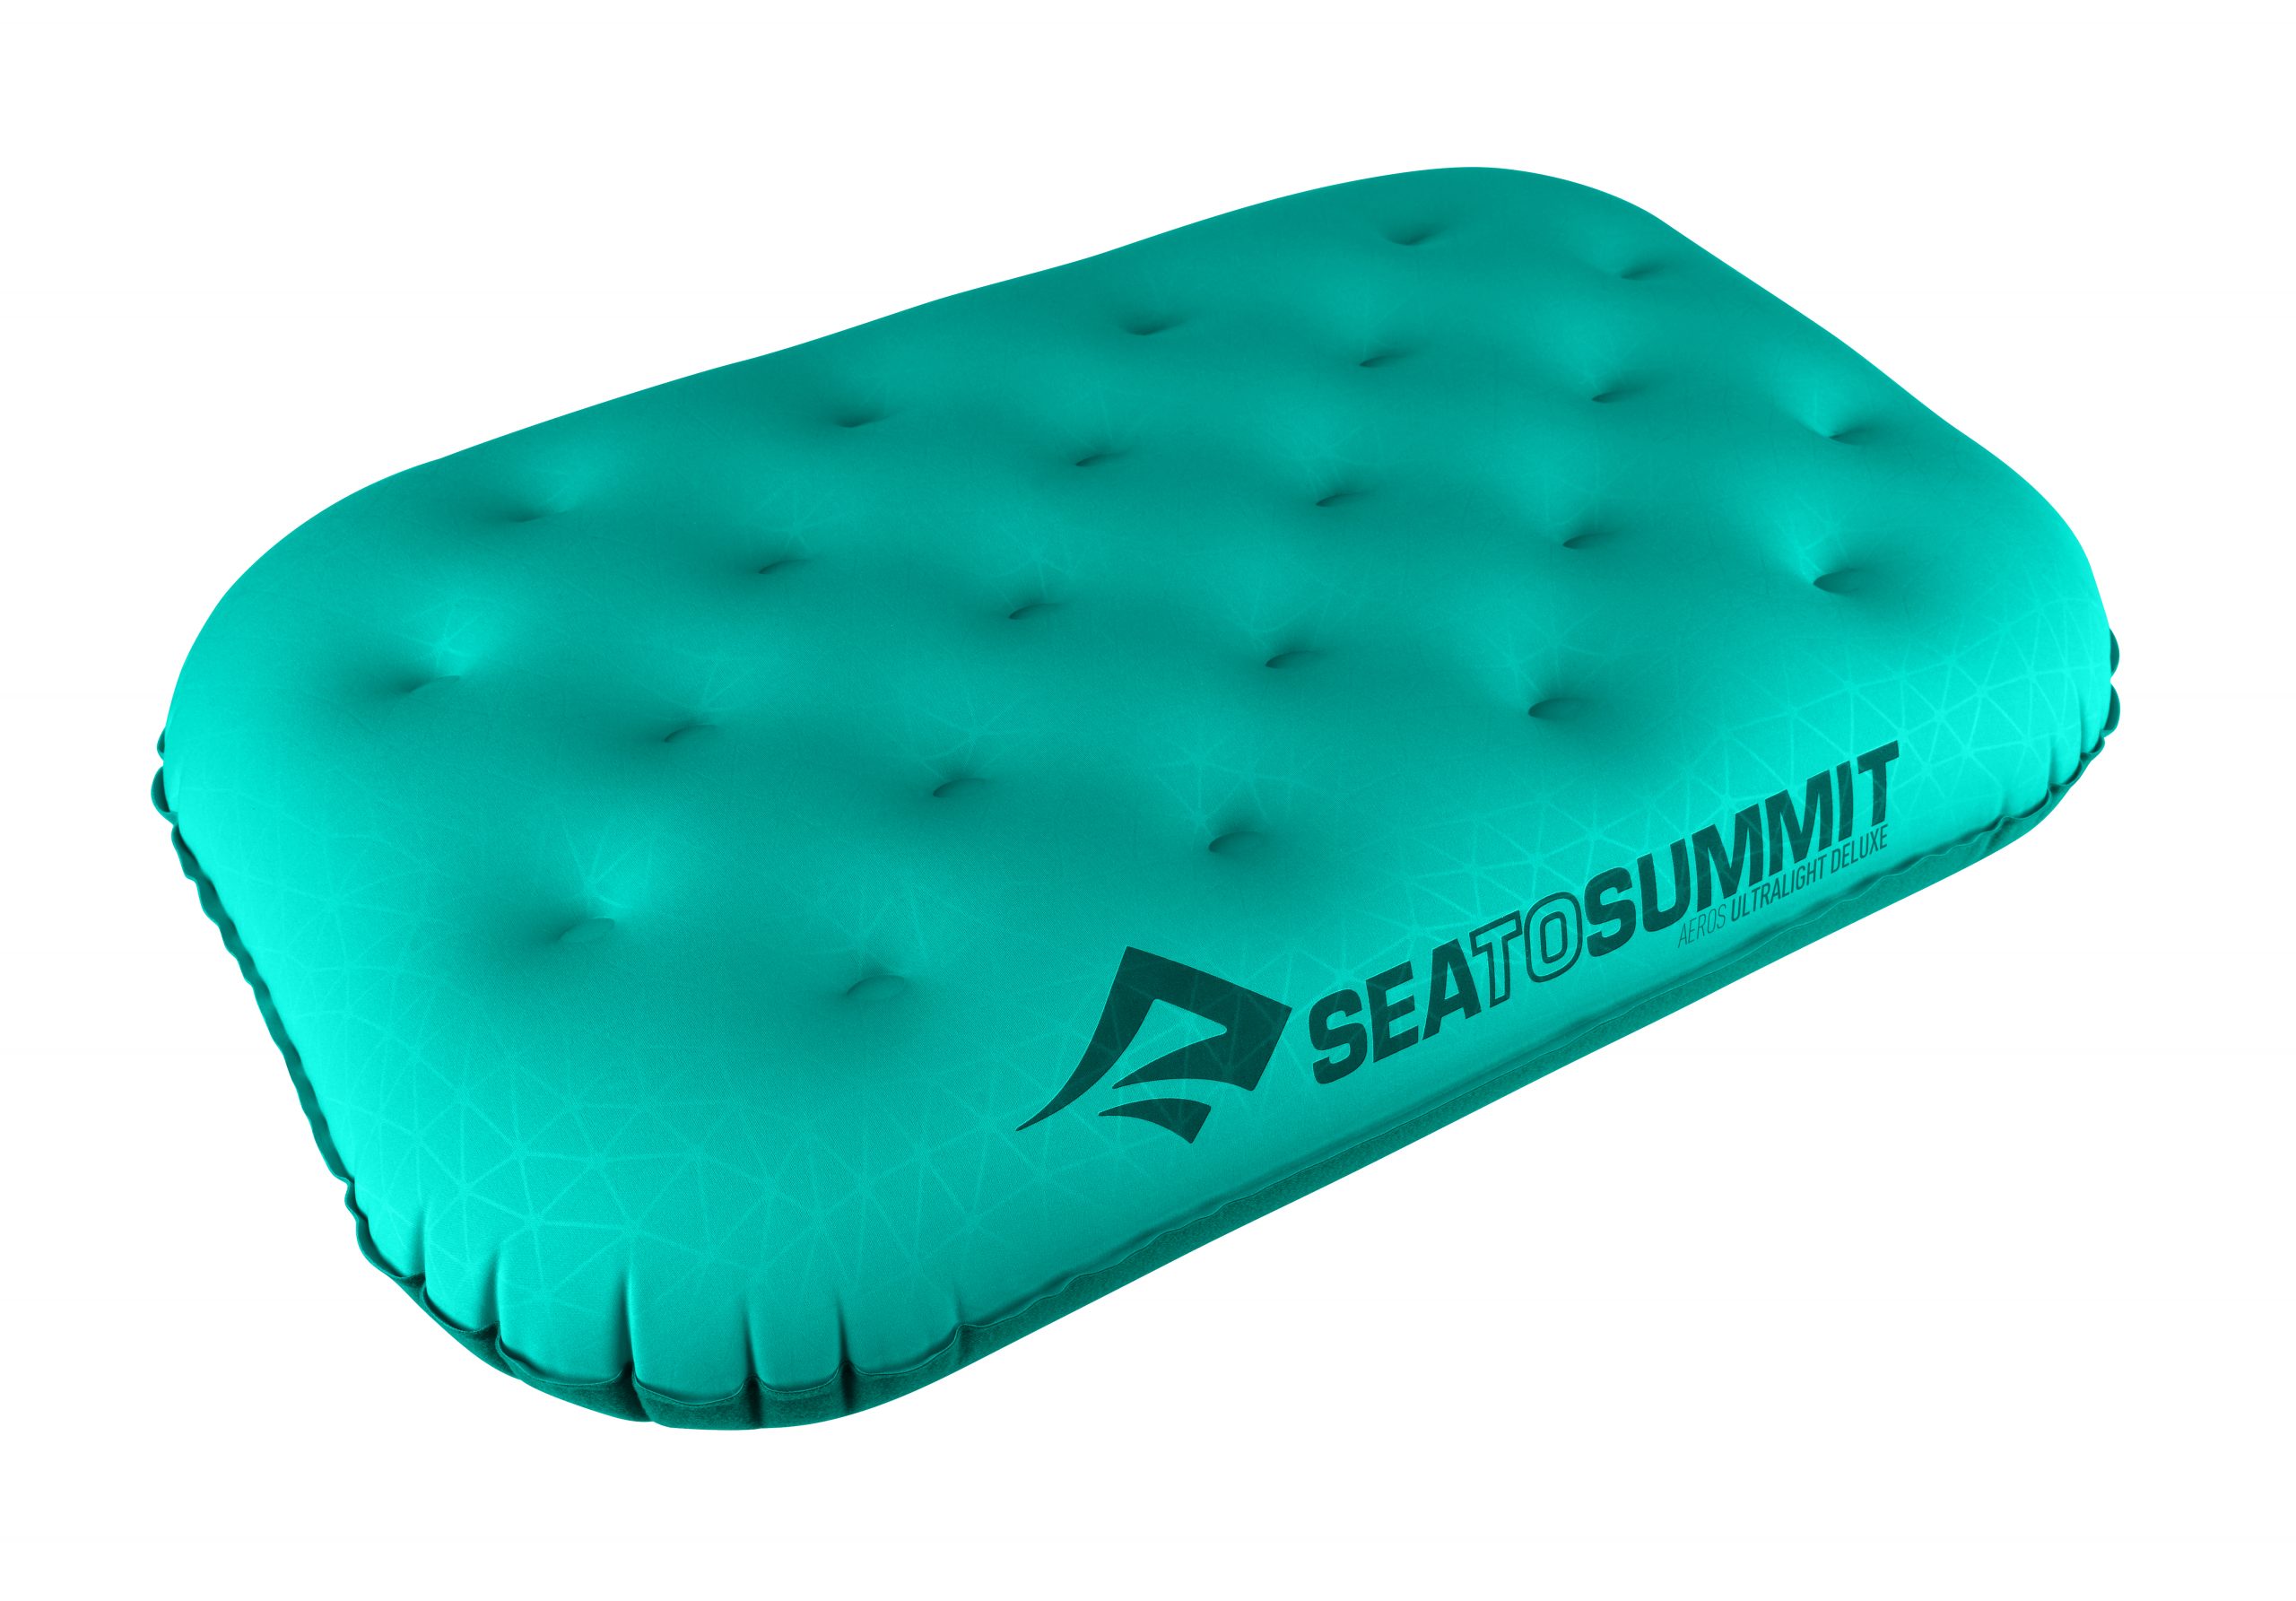 The Aeros Ultralight Deluxe Pillow  in sea foam color.